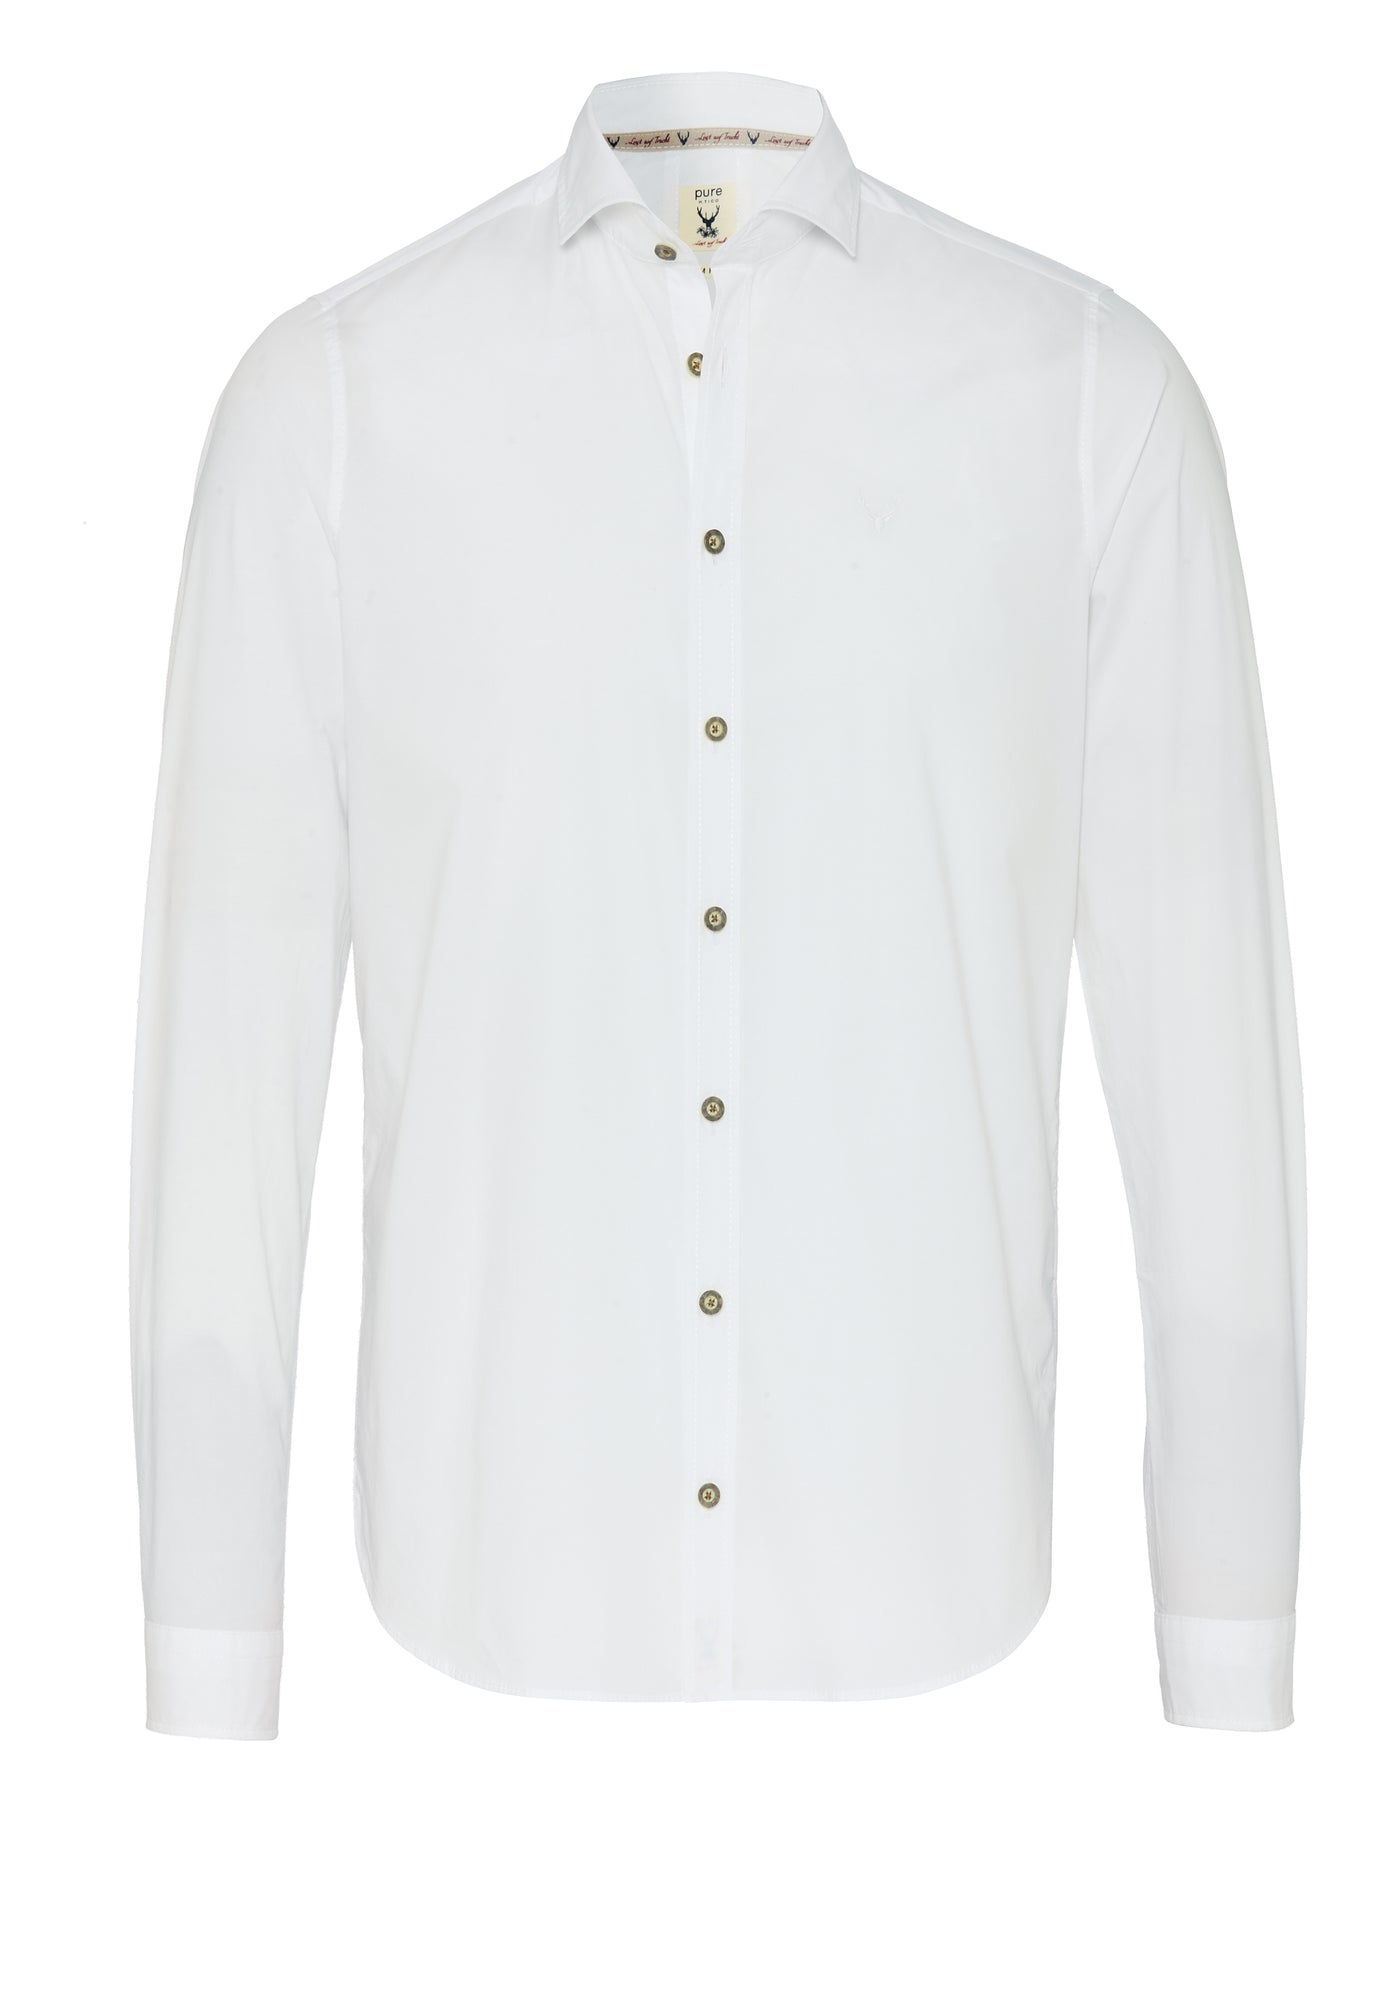 5011-21190 - Traditional shirt slim fit - white